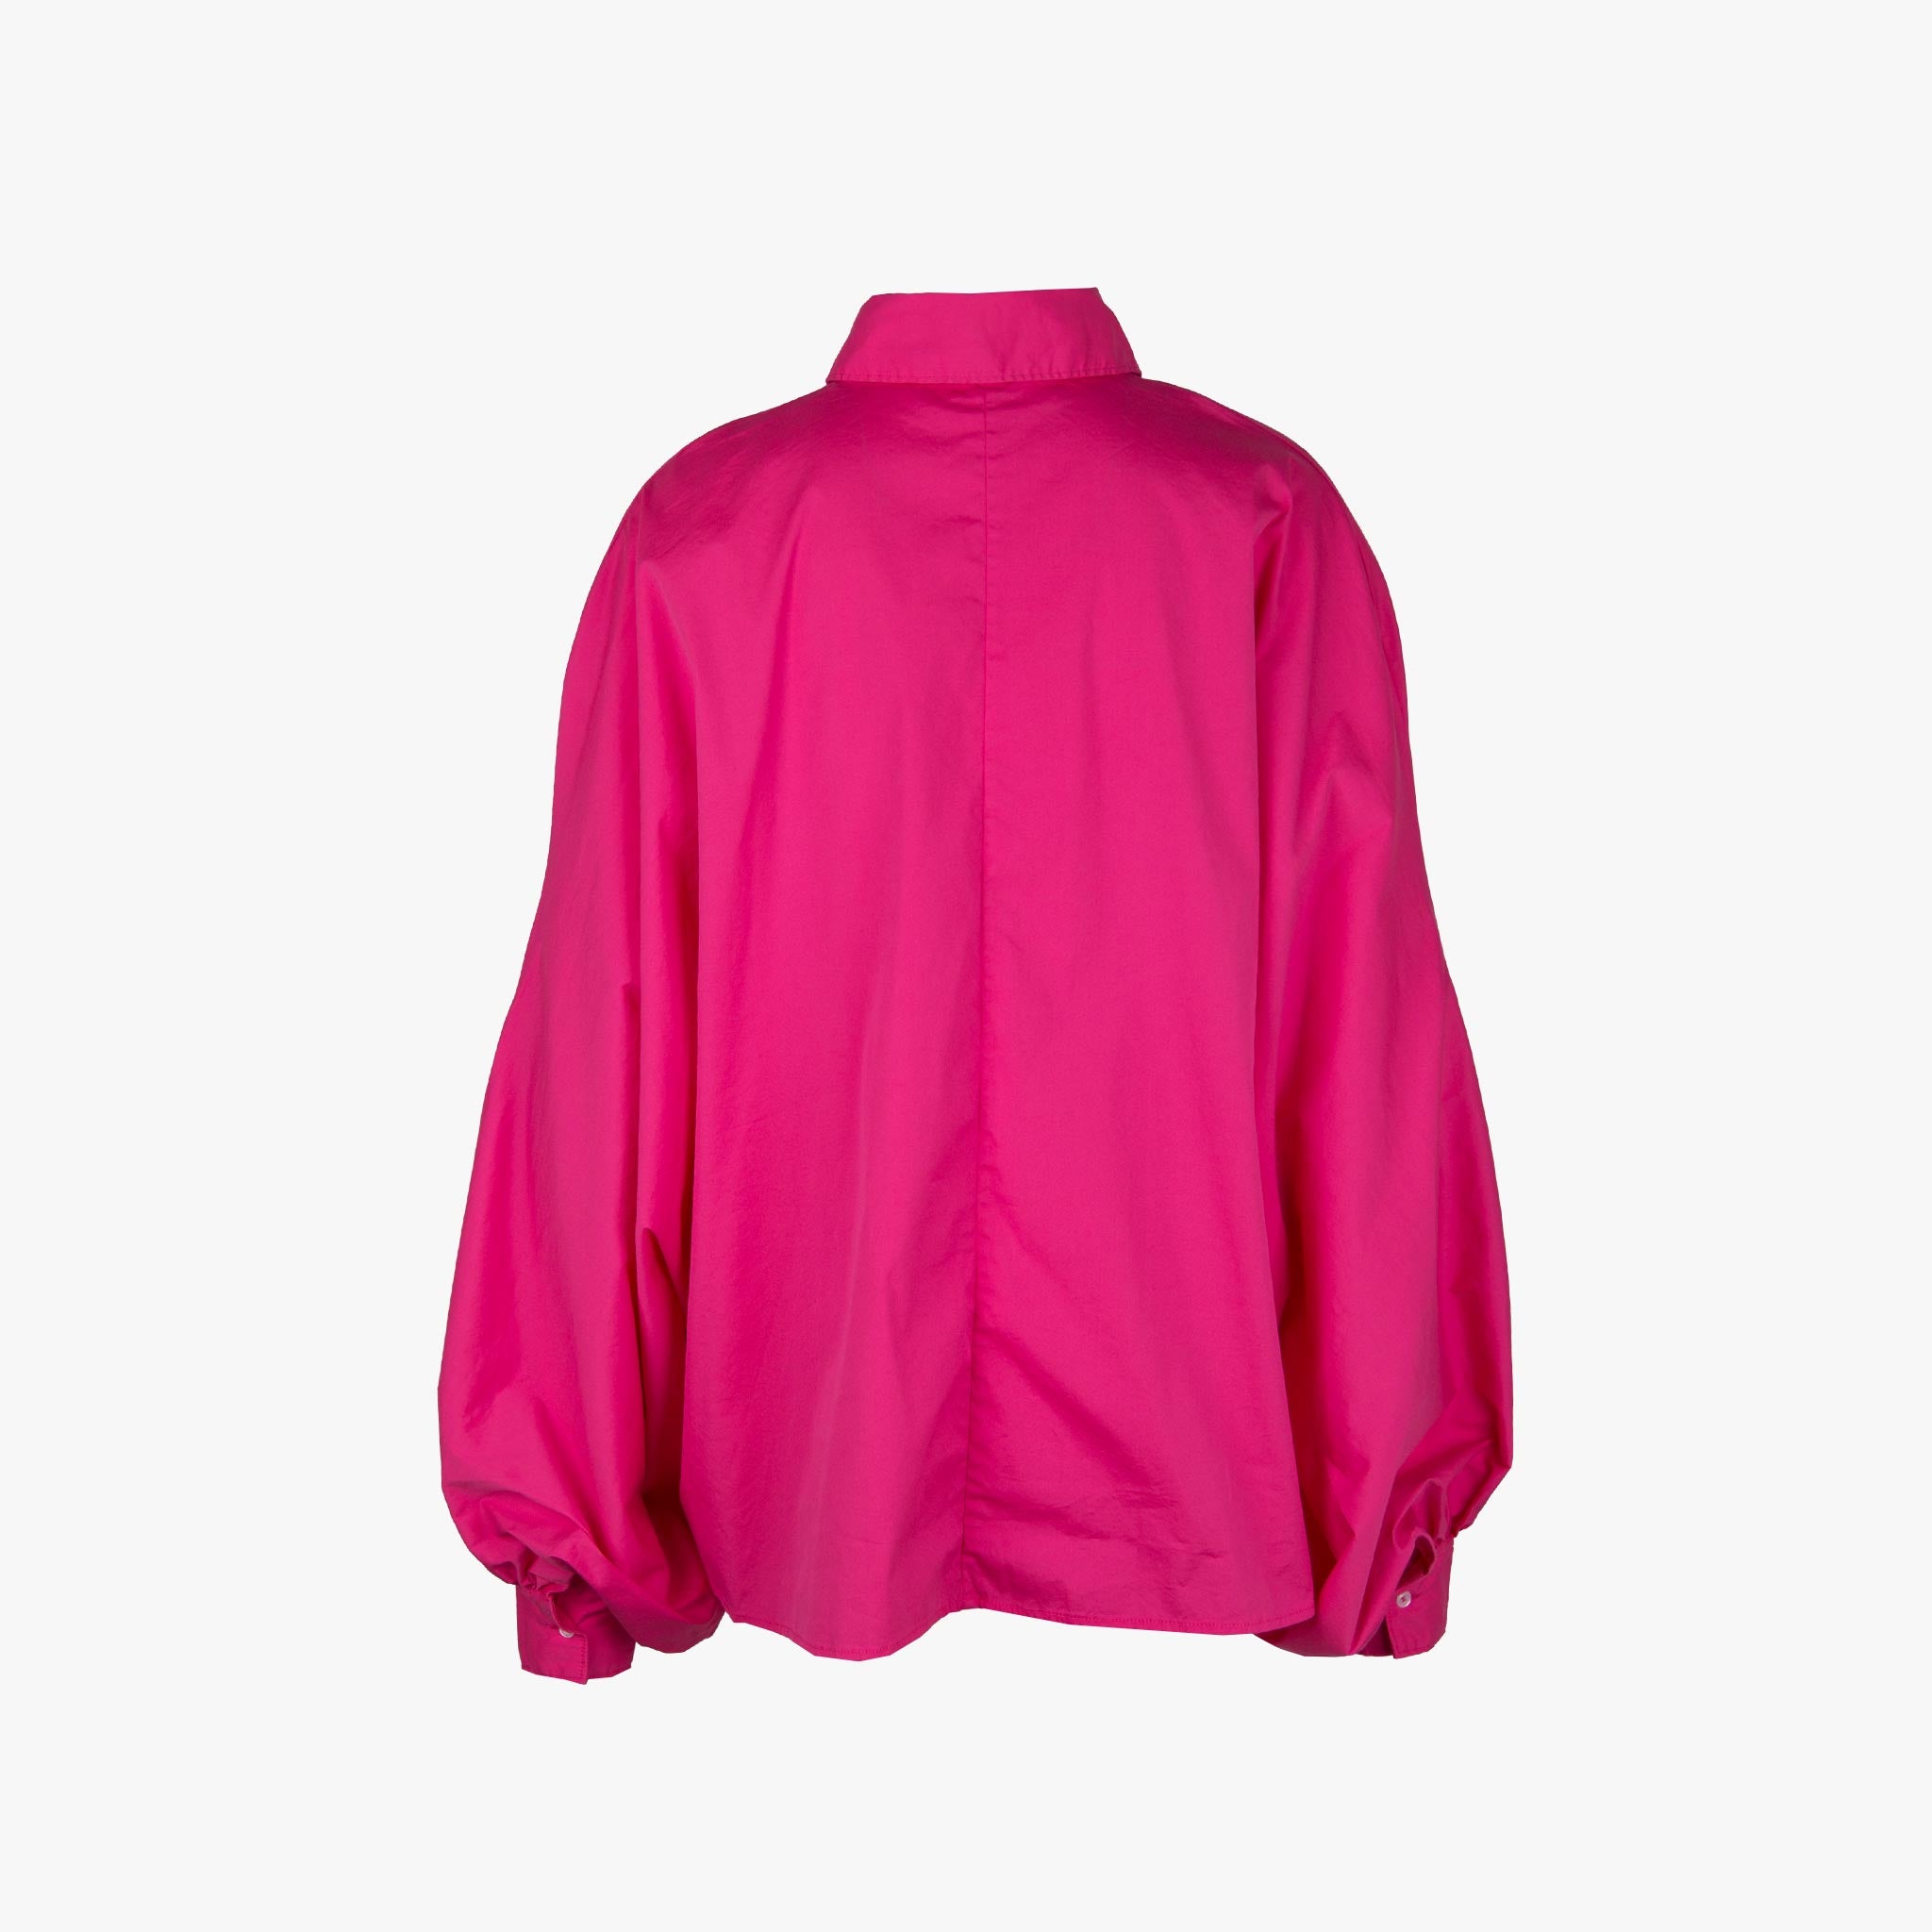 The white Shirt Bluse Fashion | pink